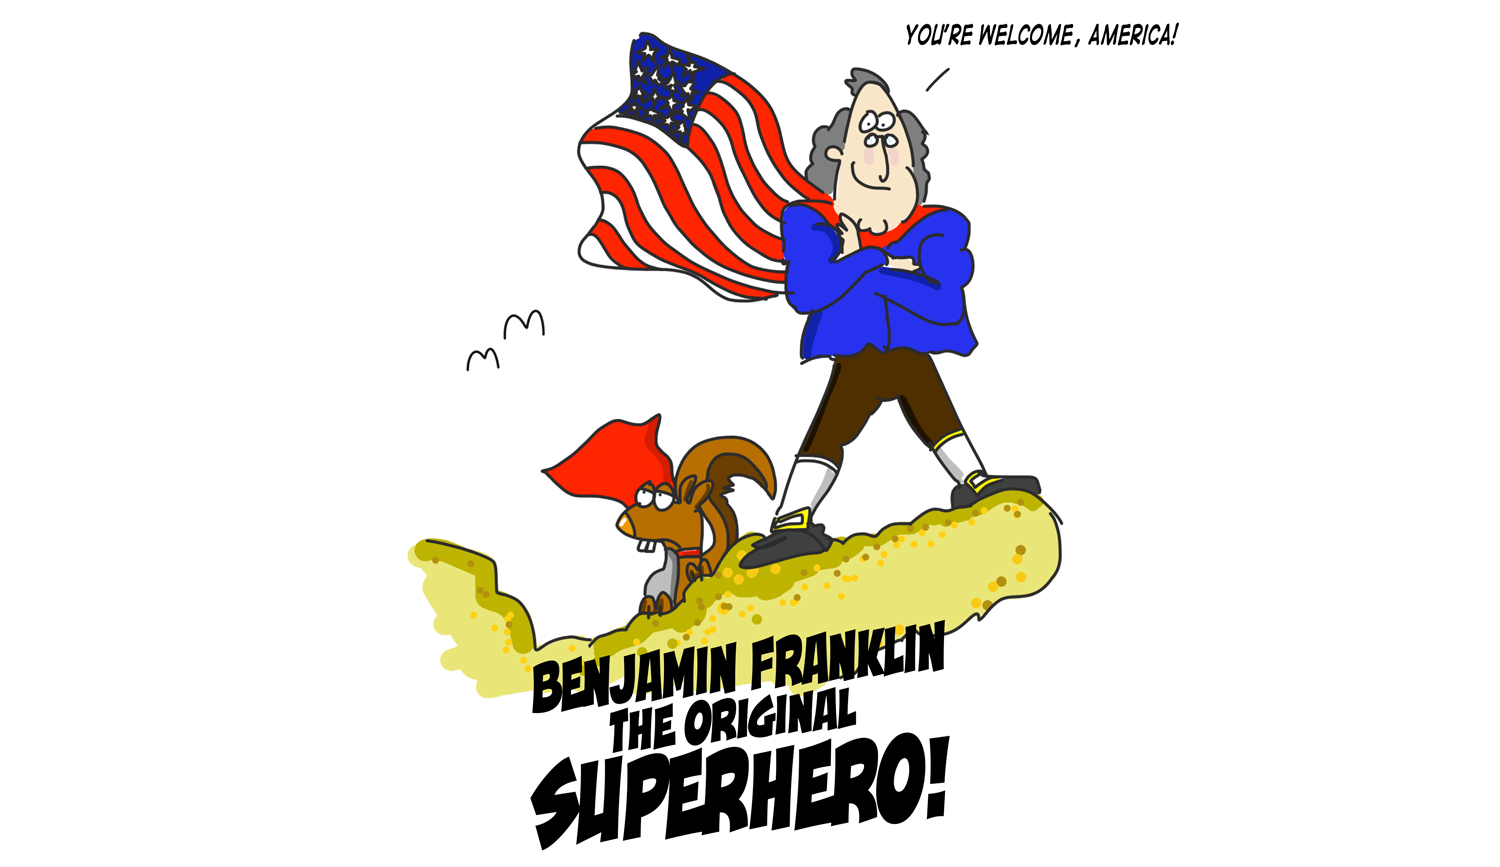 Benjamin Franklin as a superhero